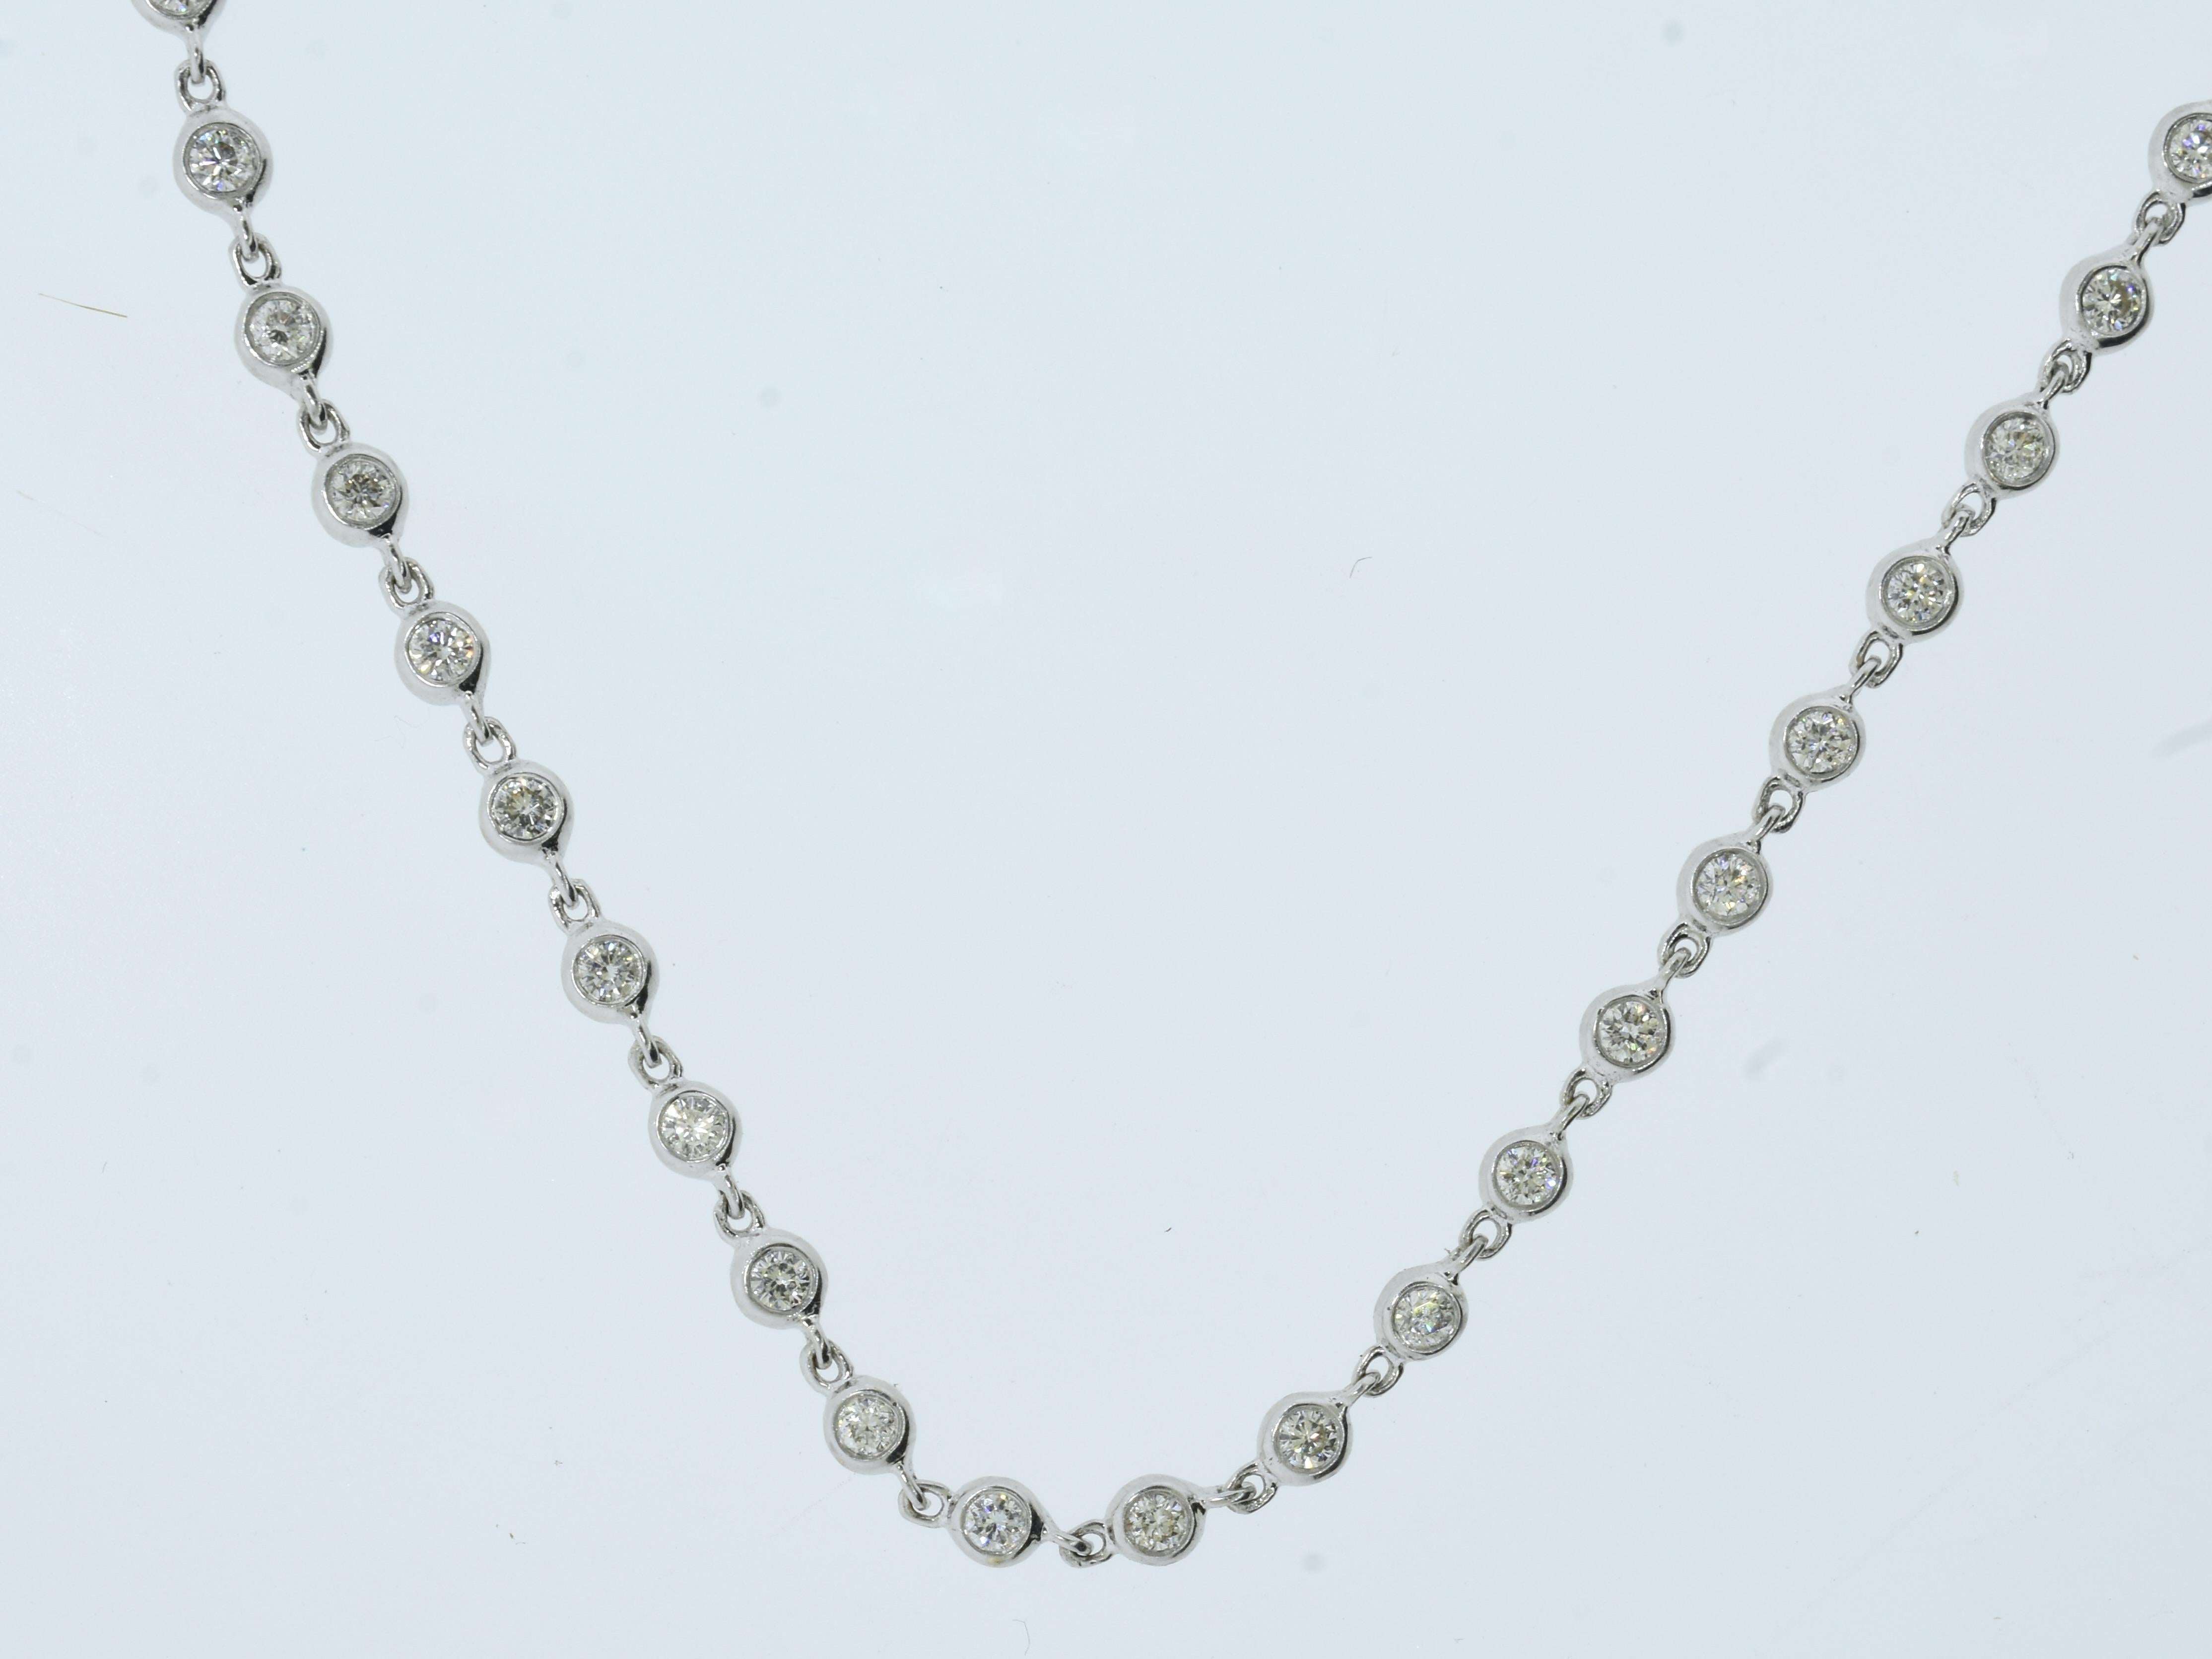 Brilliant Cut 18K White Gold Diamond Necklace Chain with 2.02 cts. of Fine Diamonds For Sale